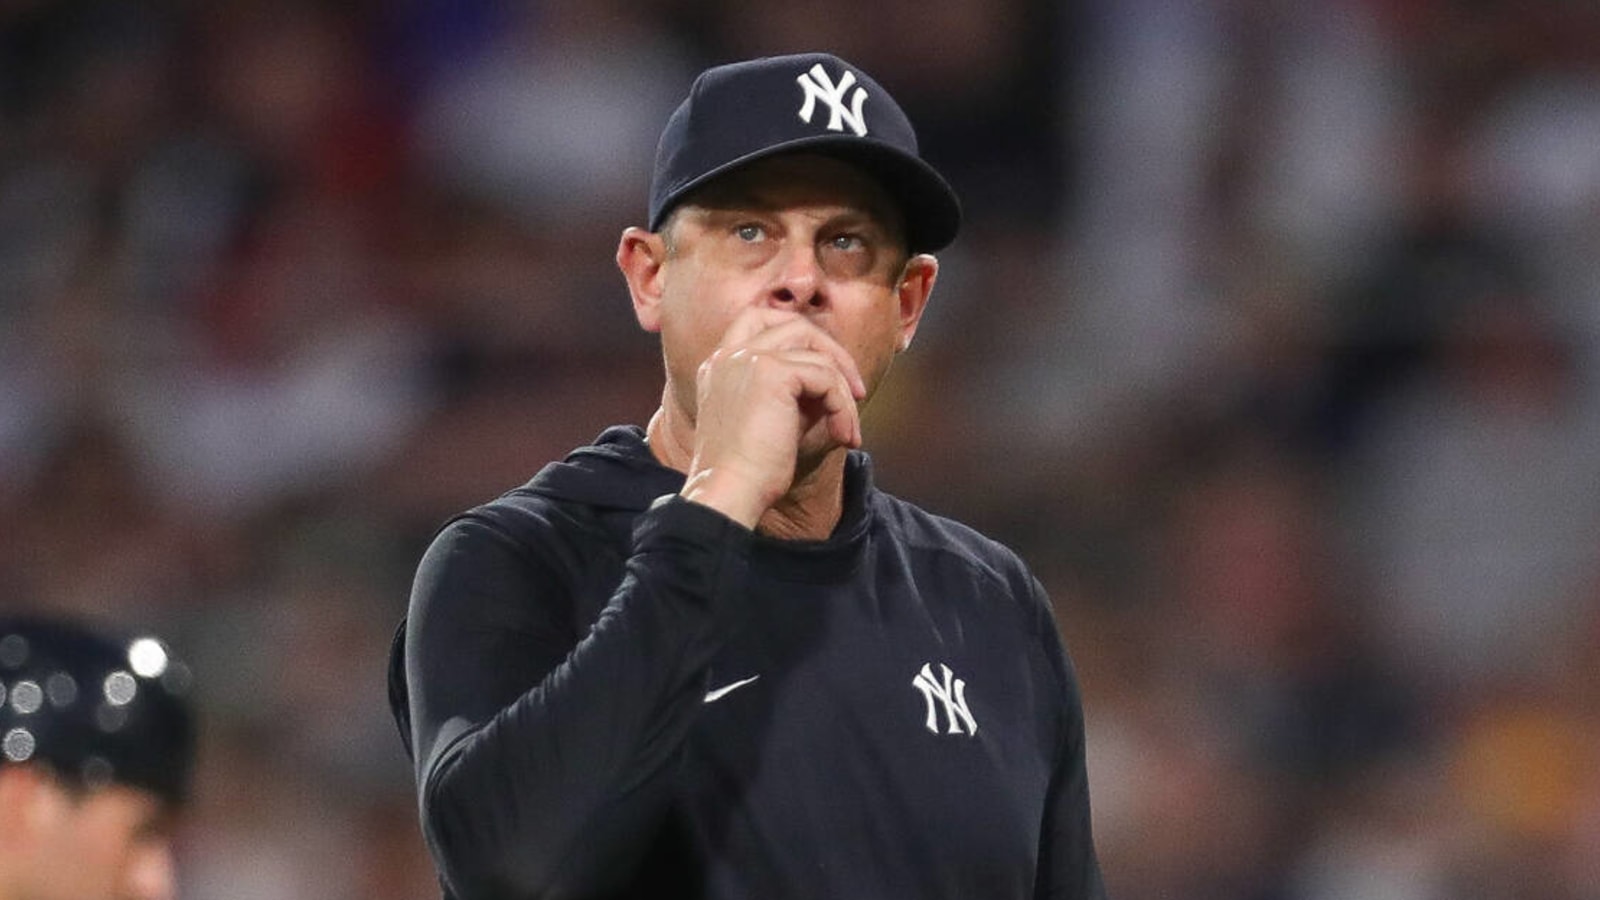 Joe Torre offers advice to Aaron Boone amid Yankees' struggles